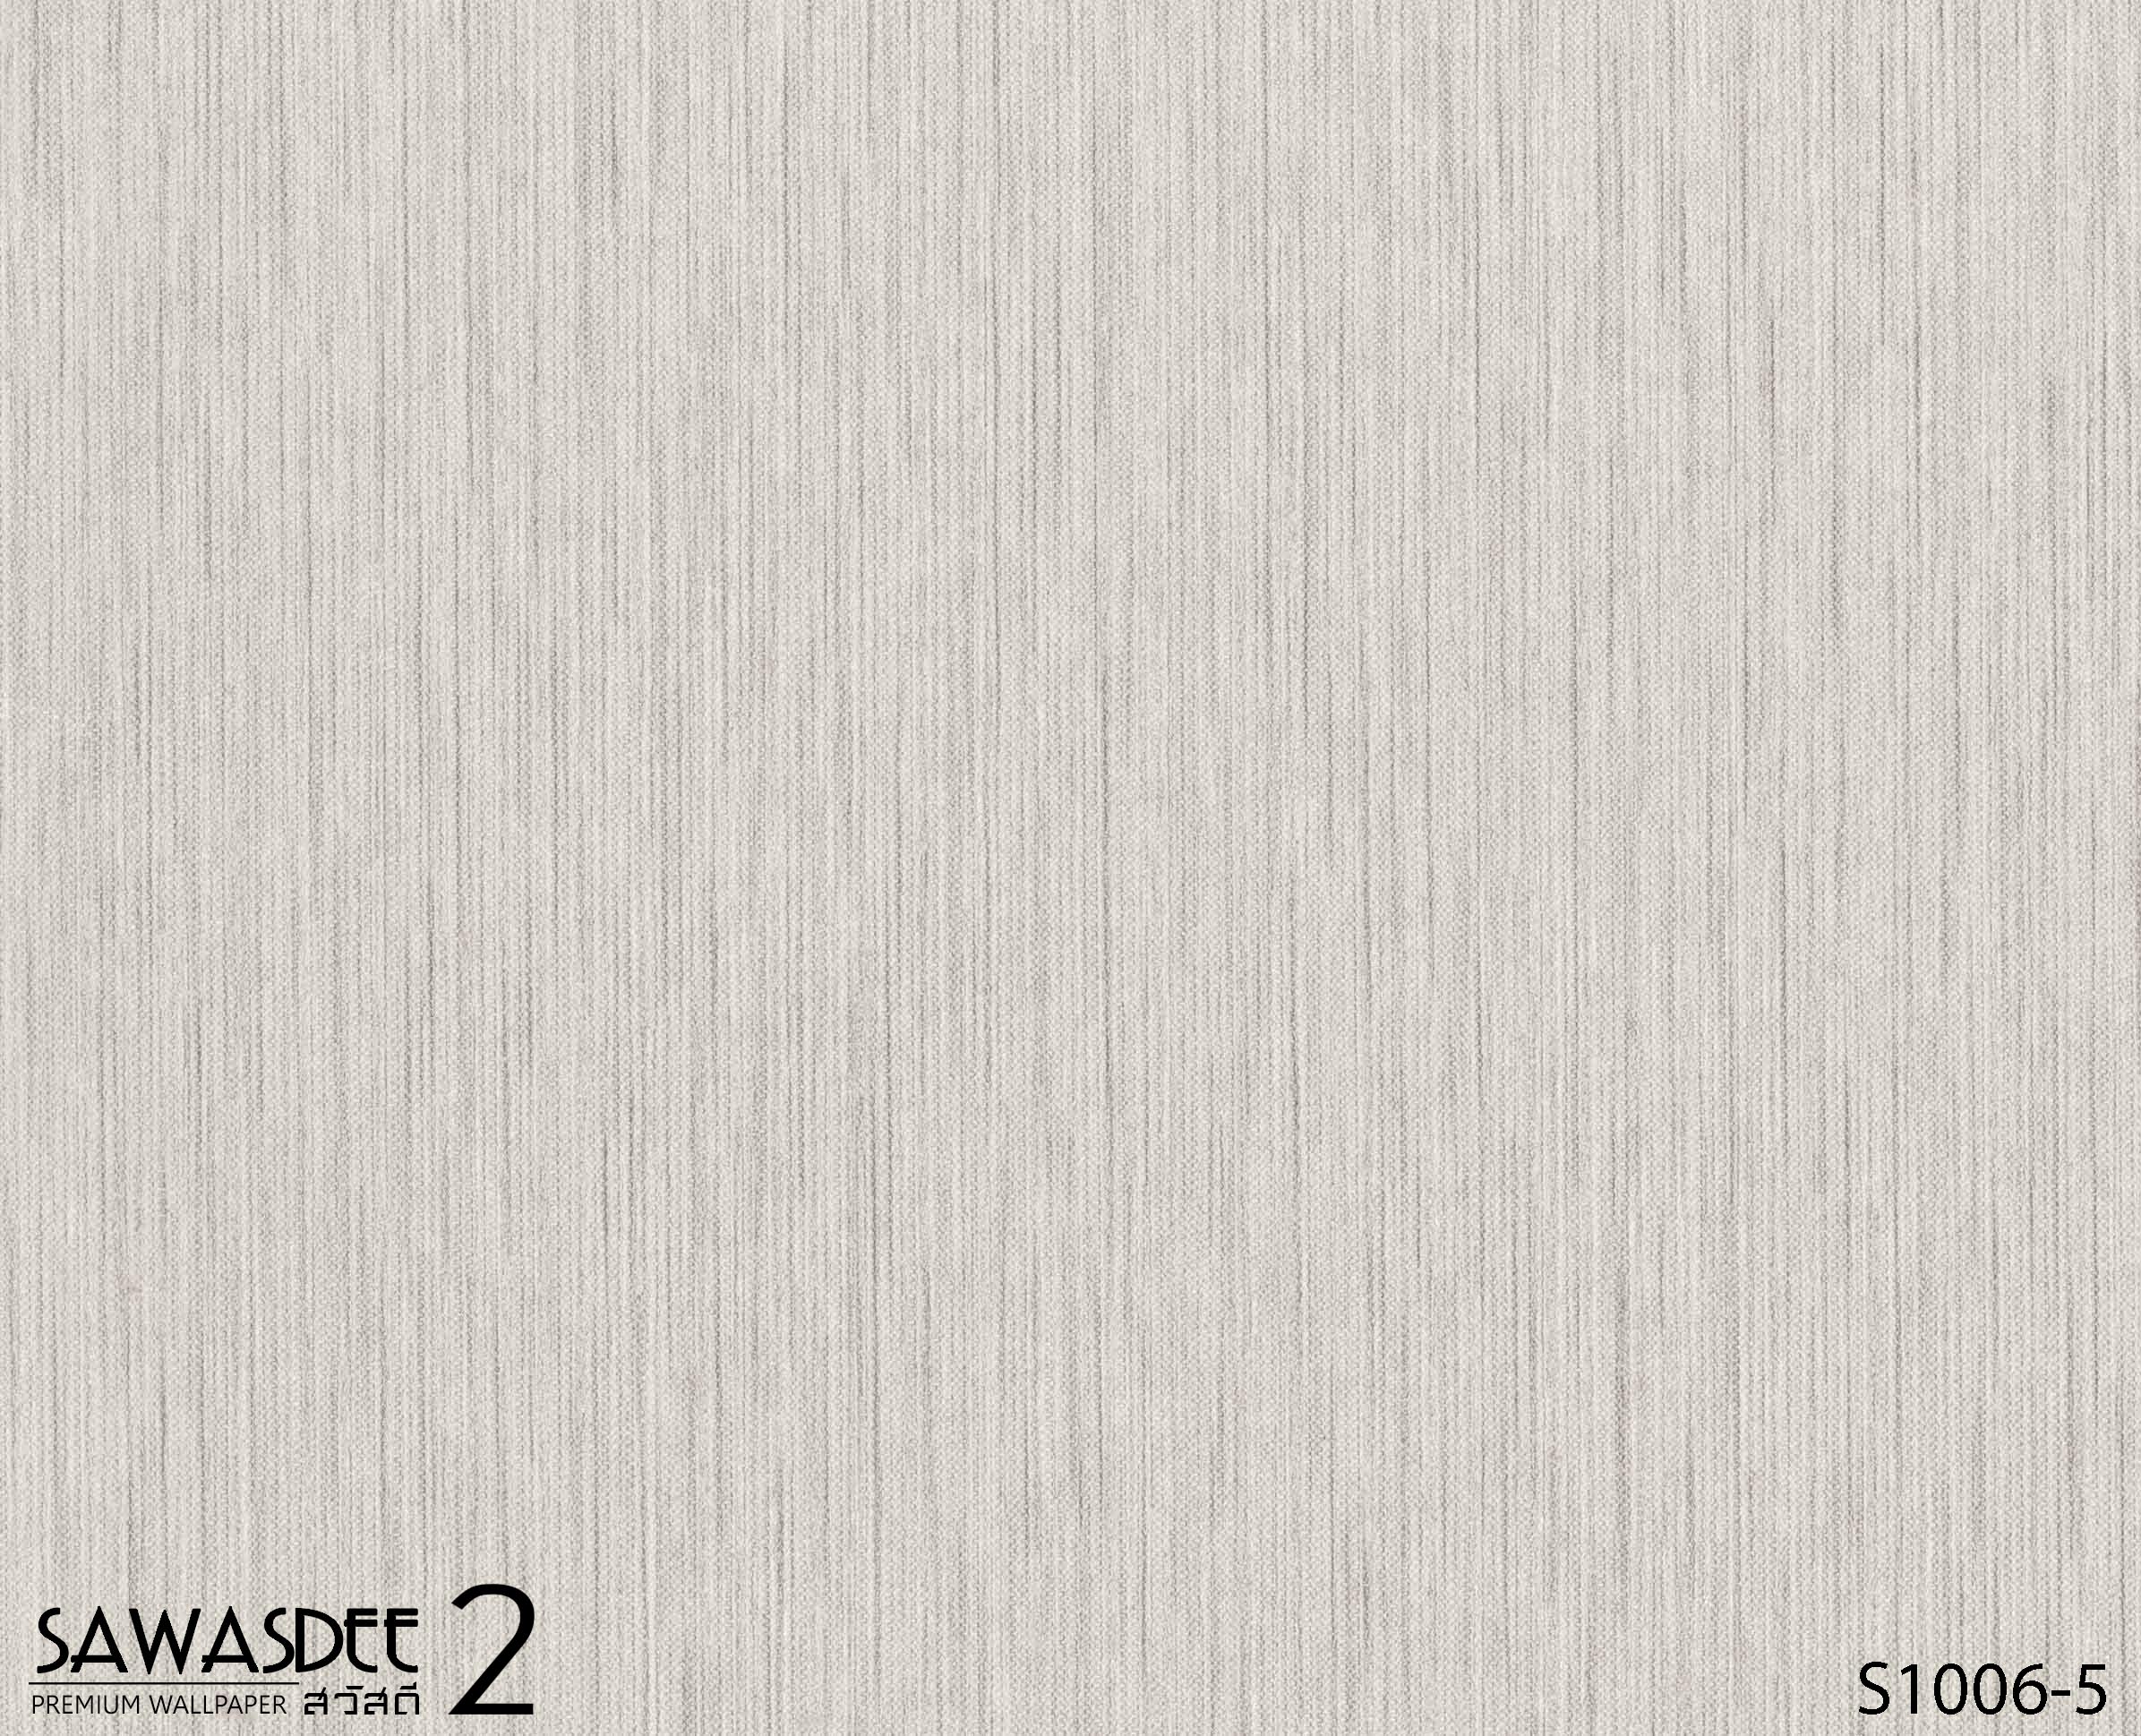 Wallpaper (SAWASDEE 2) S1006-5